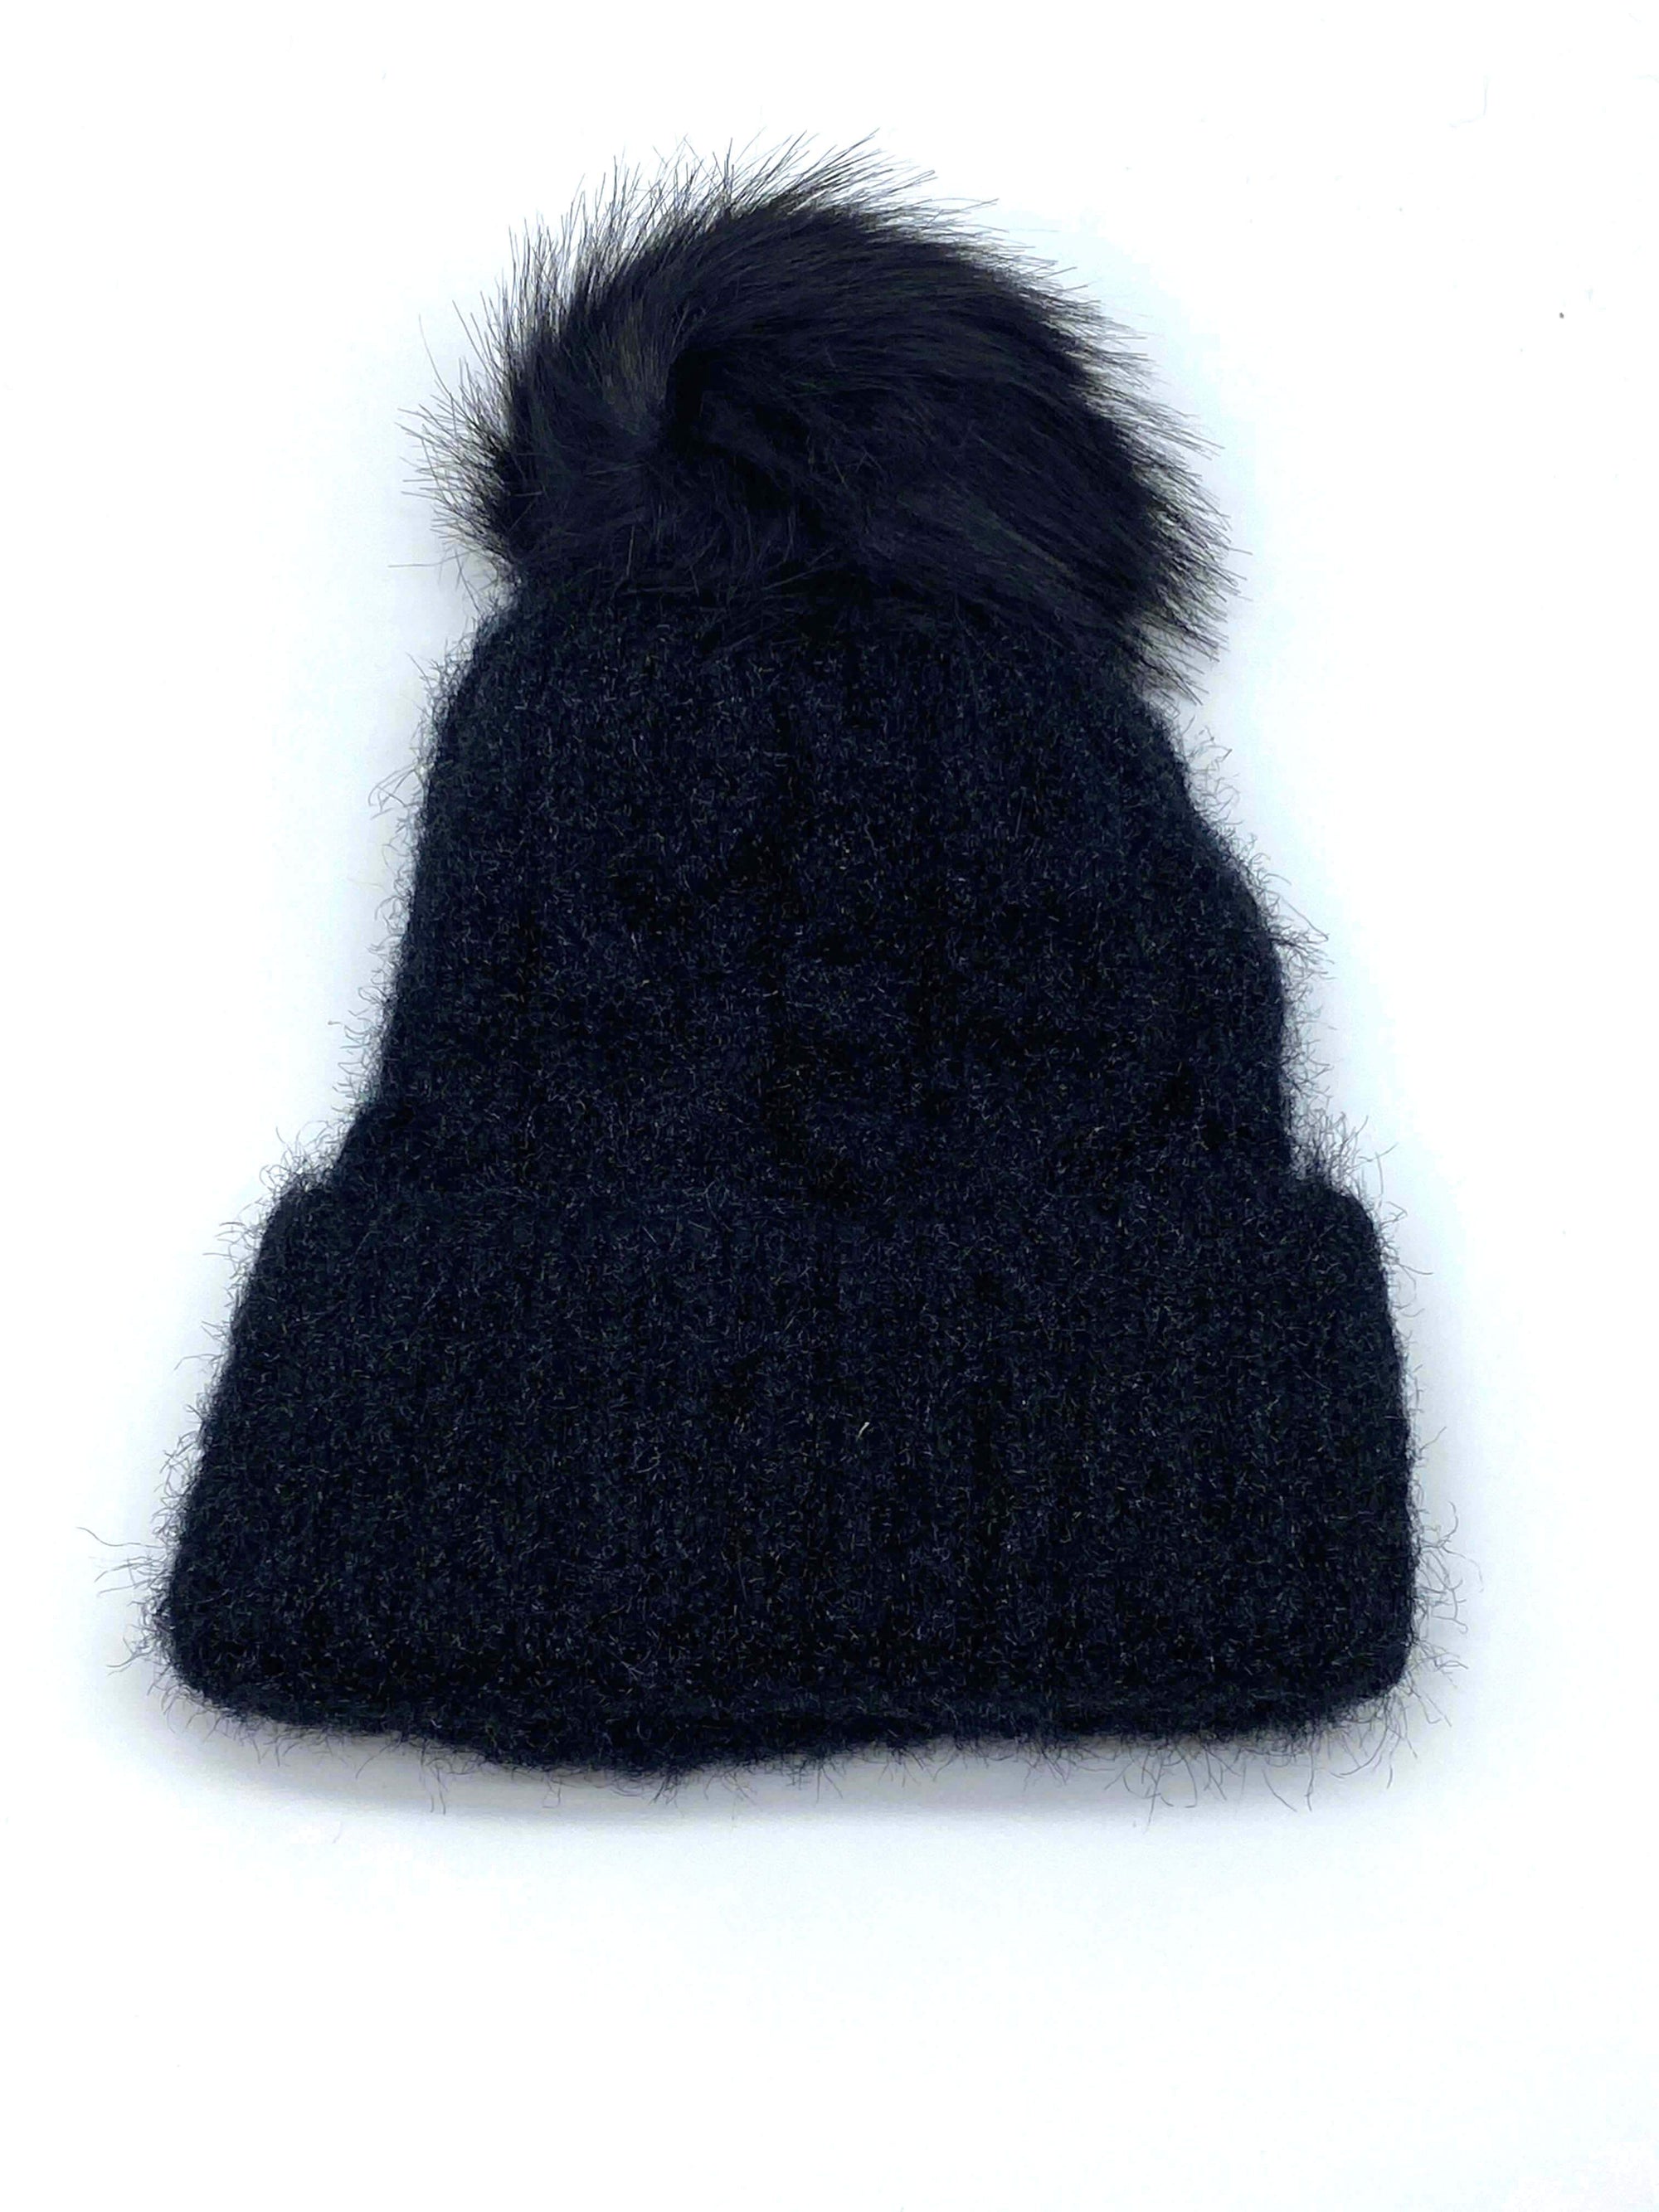 #AT225 Fuzzy Winter Beanie / Black (PC)